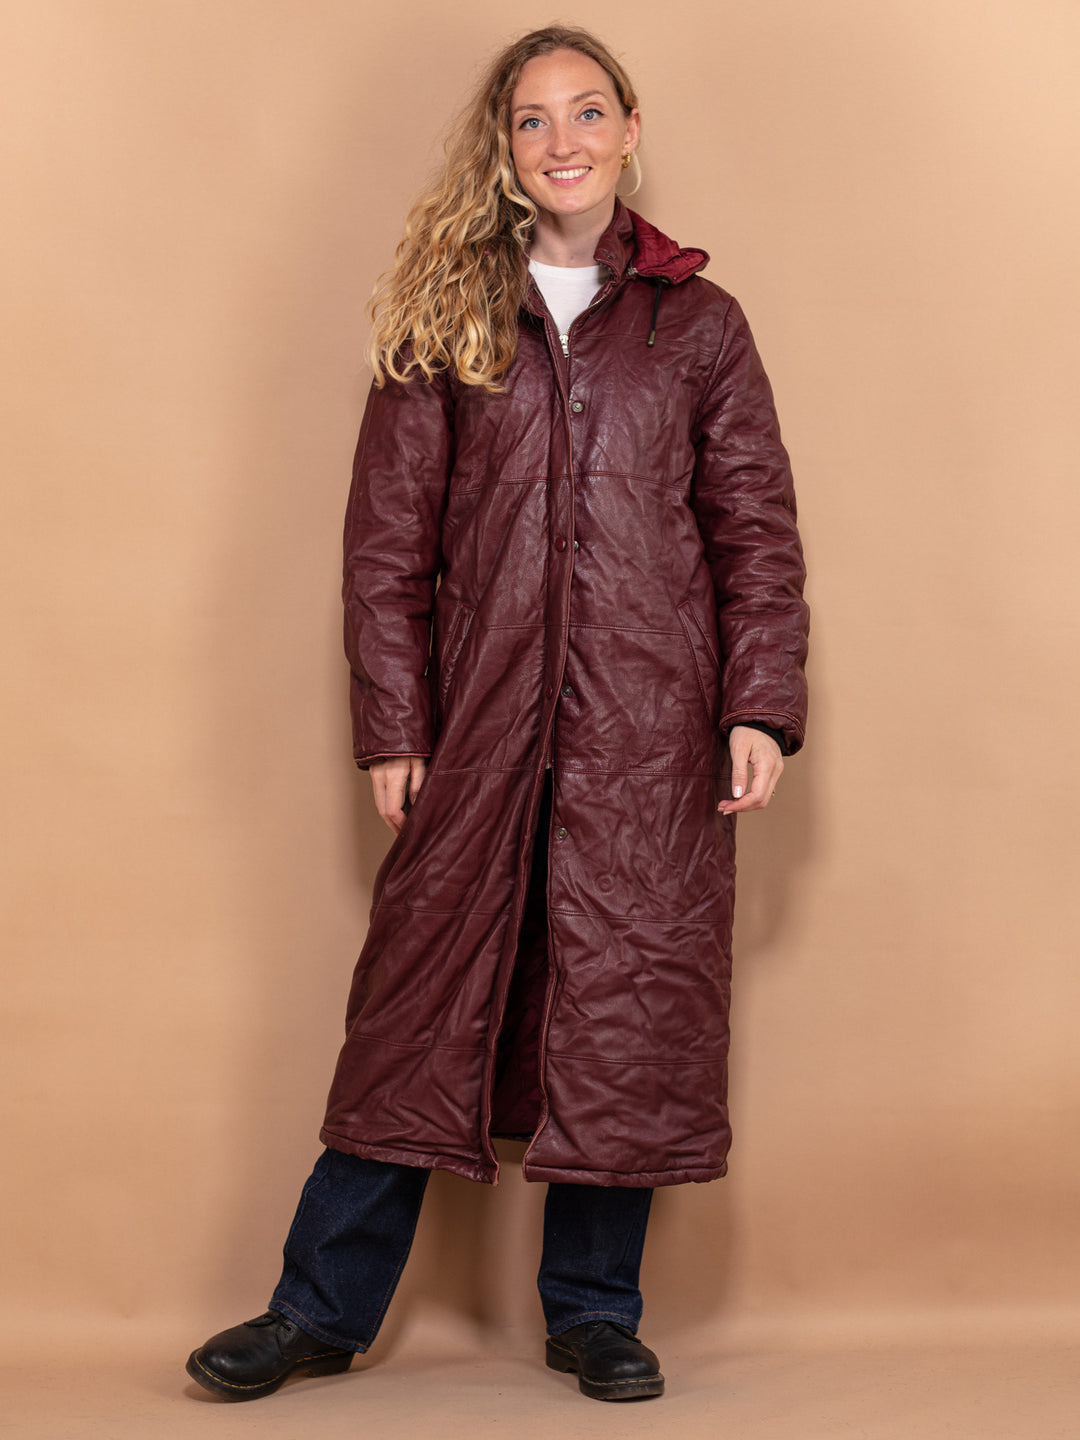 Hooded Leather Coat 80s, Size Medium Bordo Leather Maxi Coat, Retro Women Coat, Vintage Women Outerwear, Timeless Coat